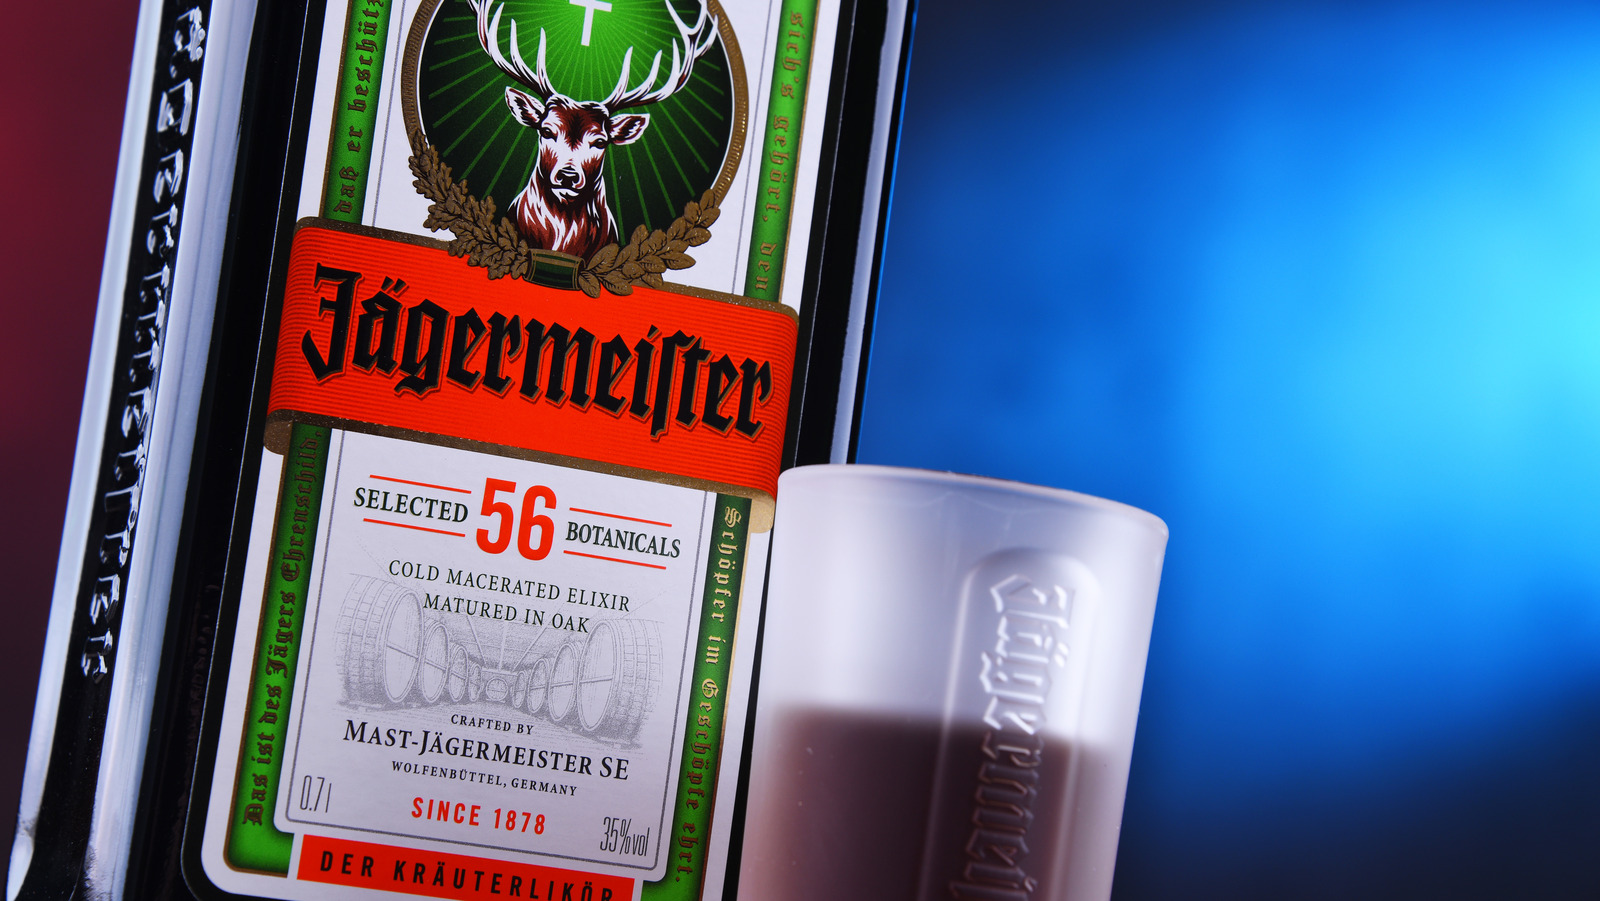 12 Best Drinks To Mix With Jägermeister,